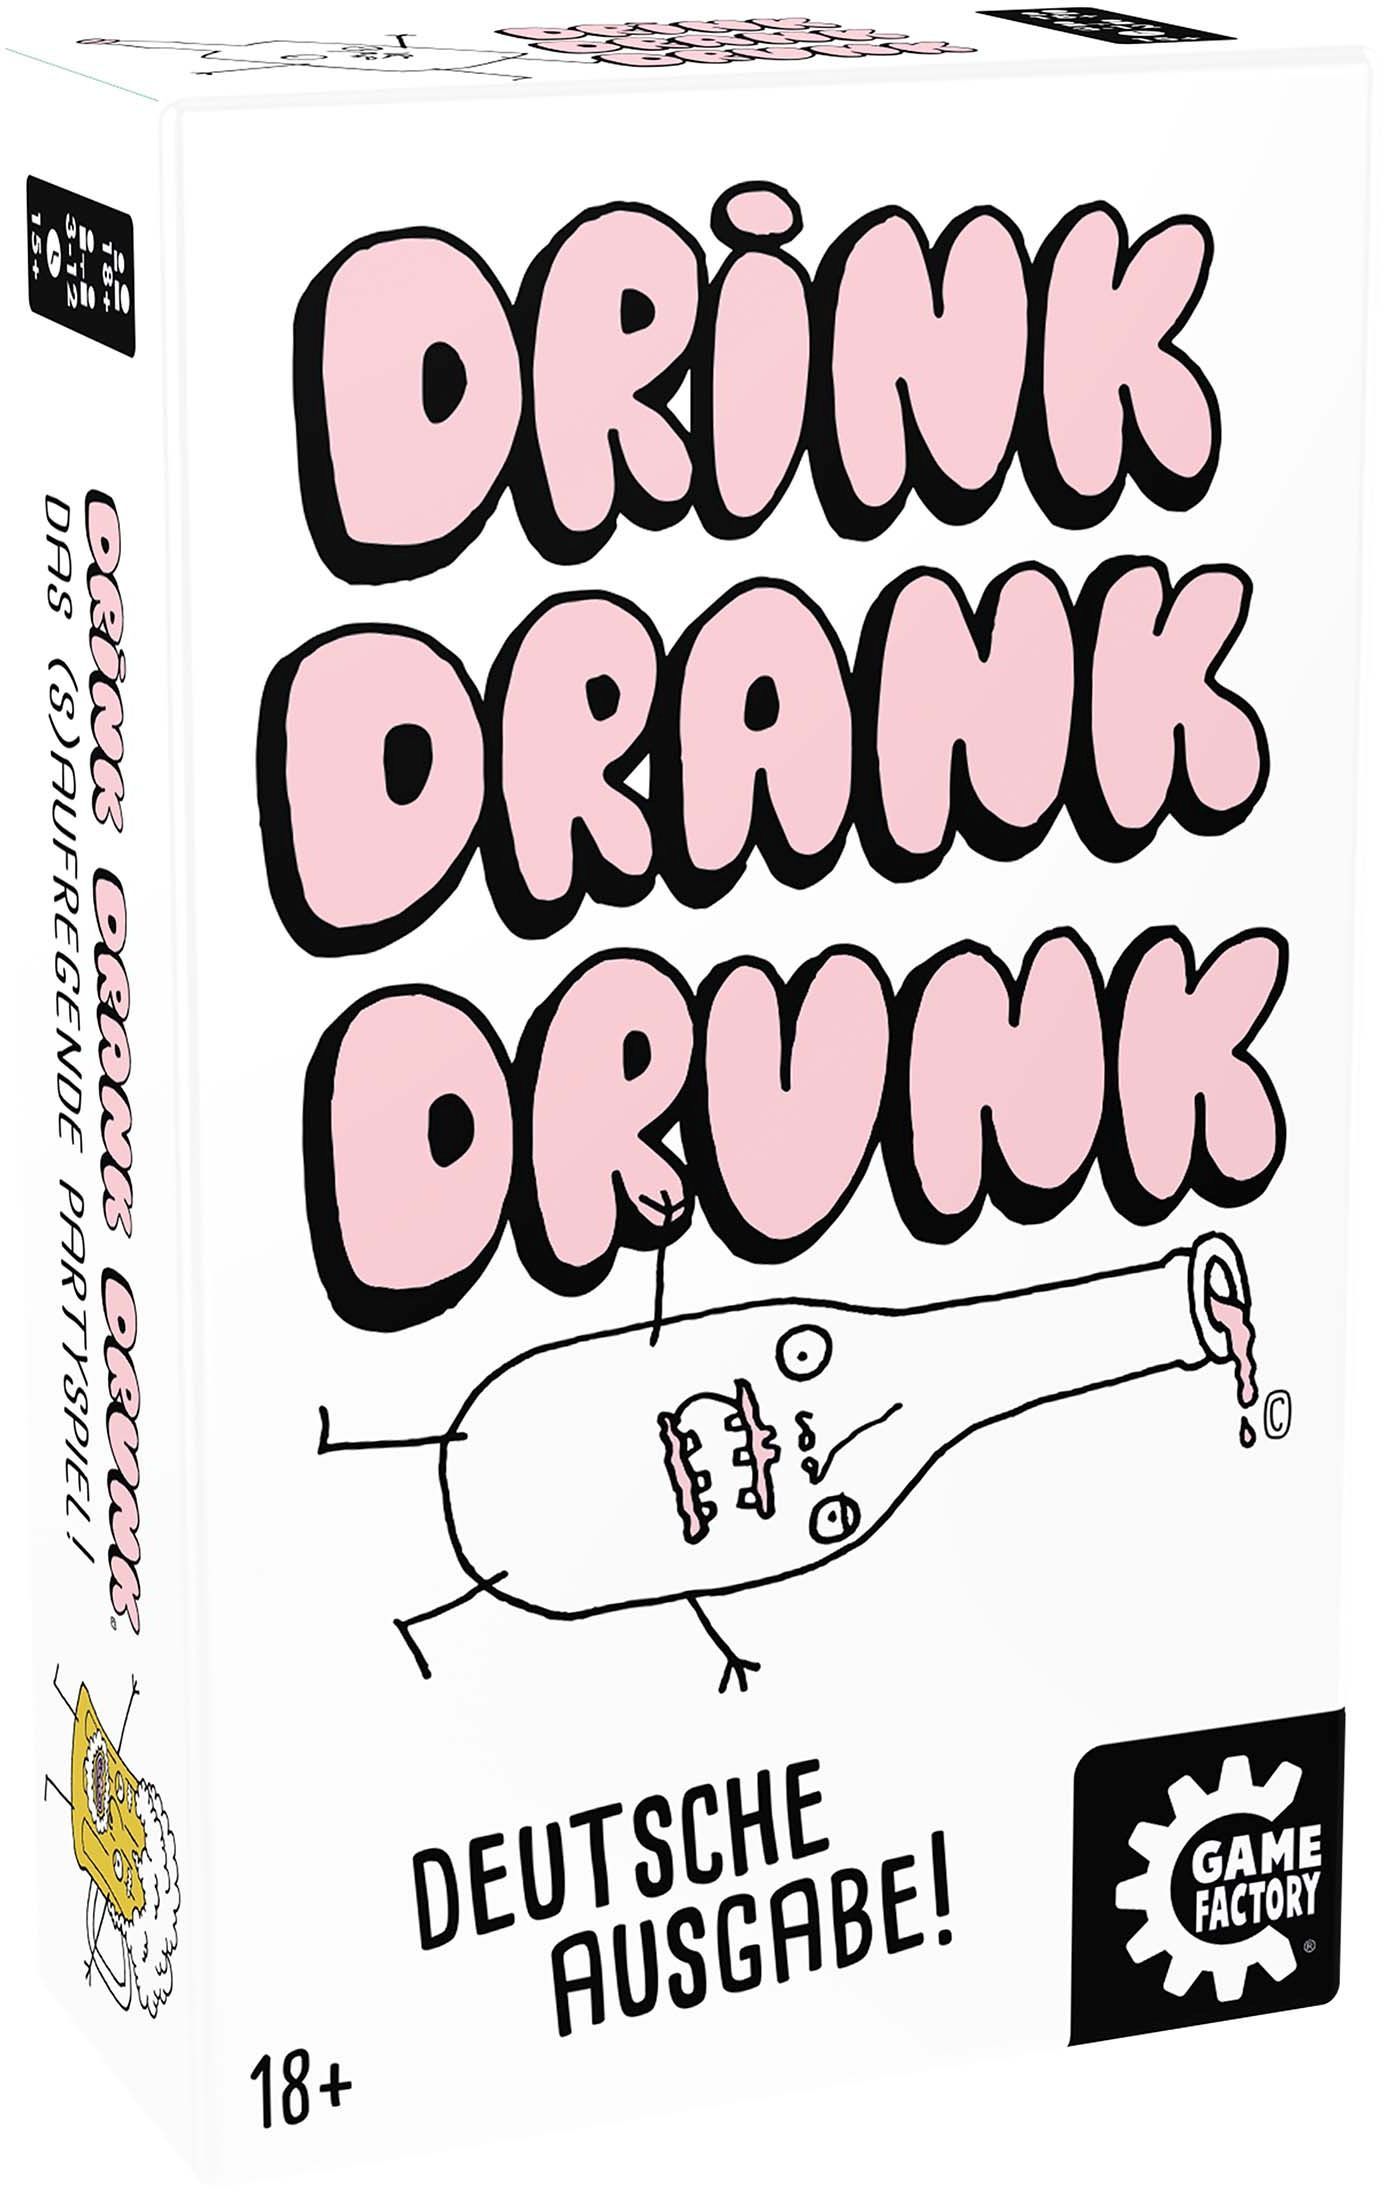 _Drink Drank Drunk_